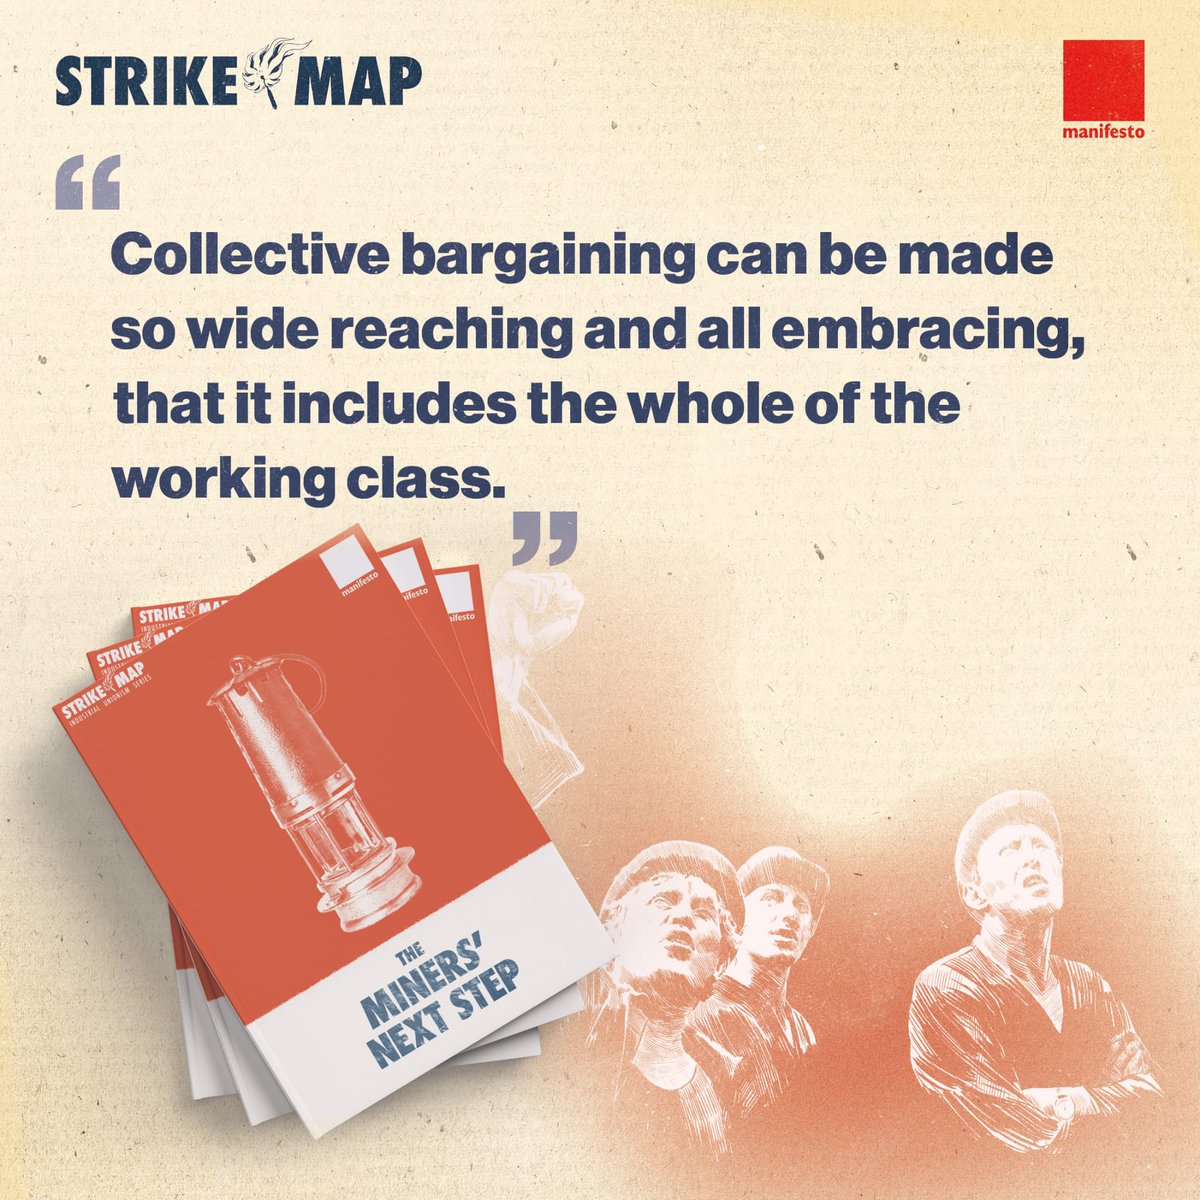 strike_map tweet picture